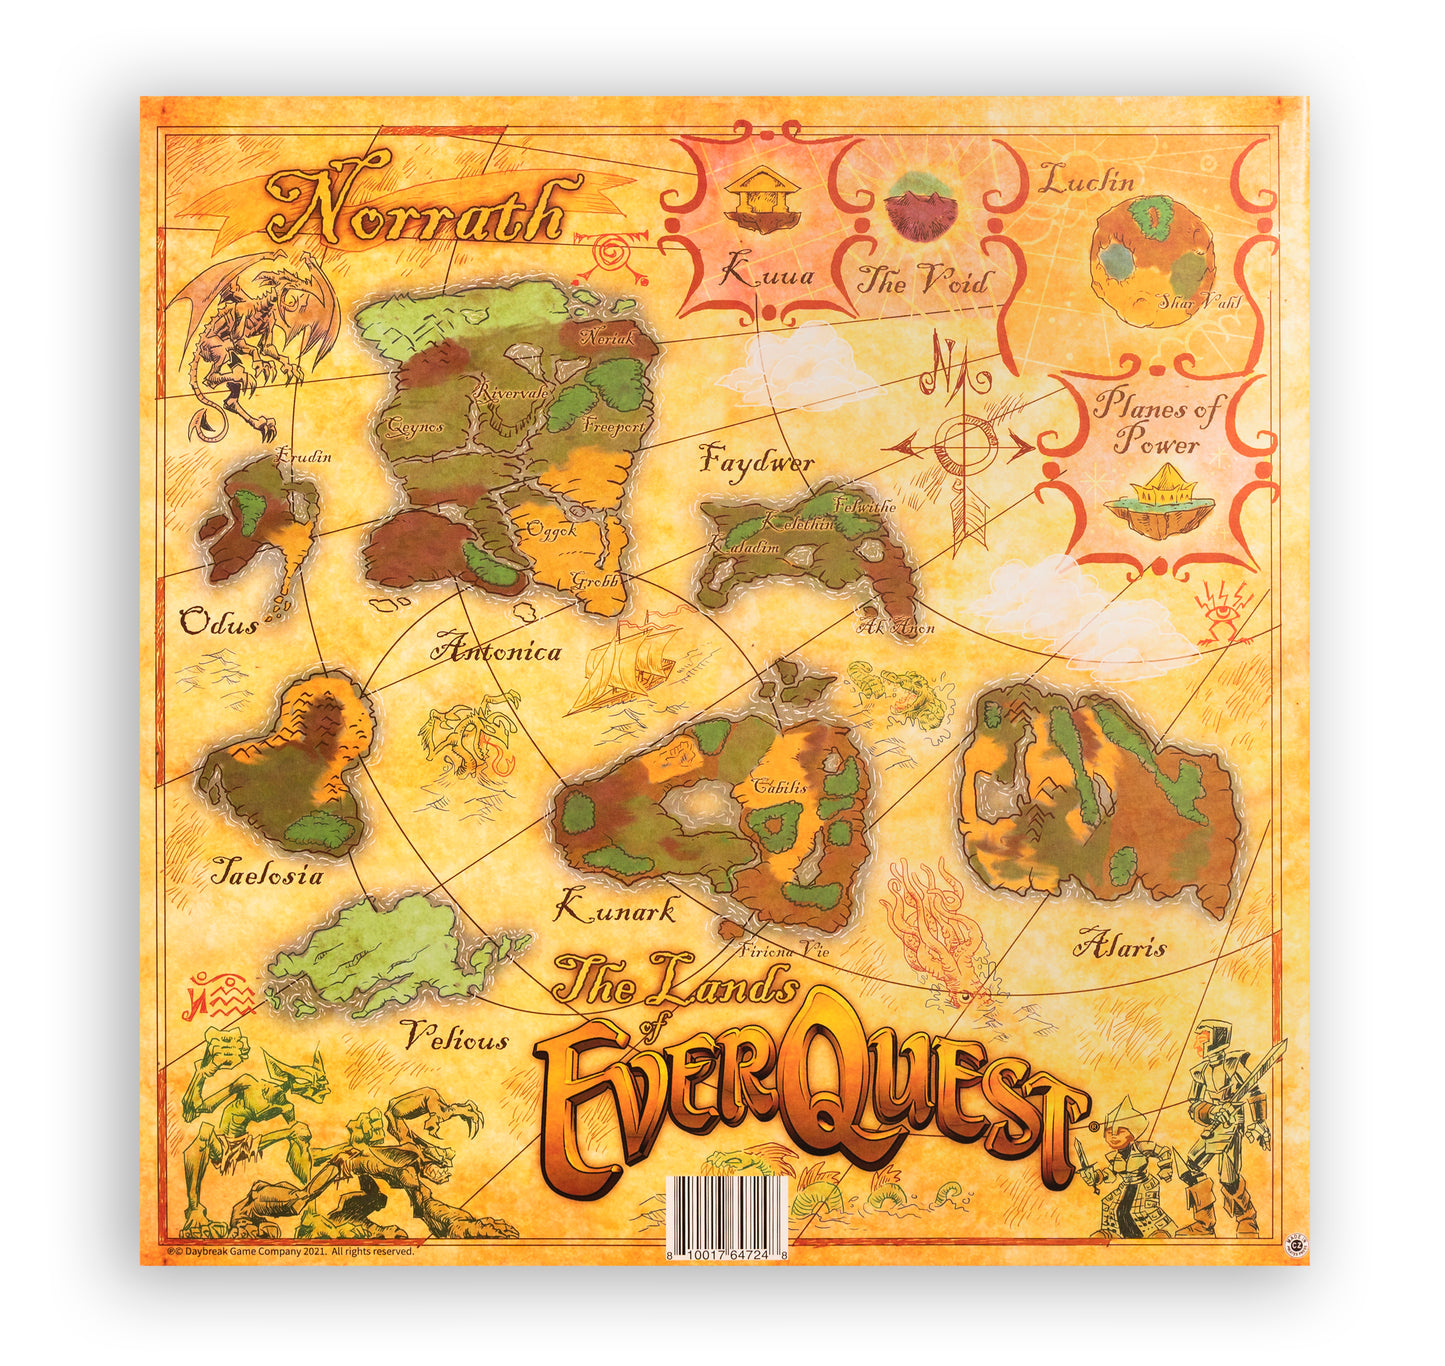 EverQuest® Original Soundtrack on Black Vinyl